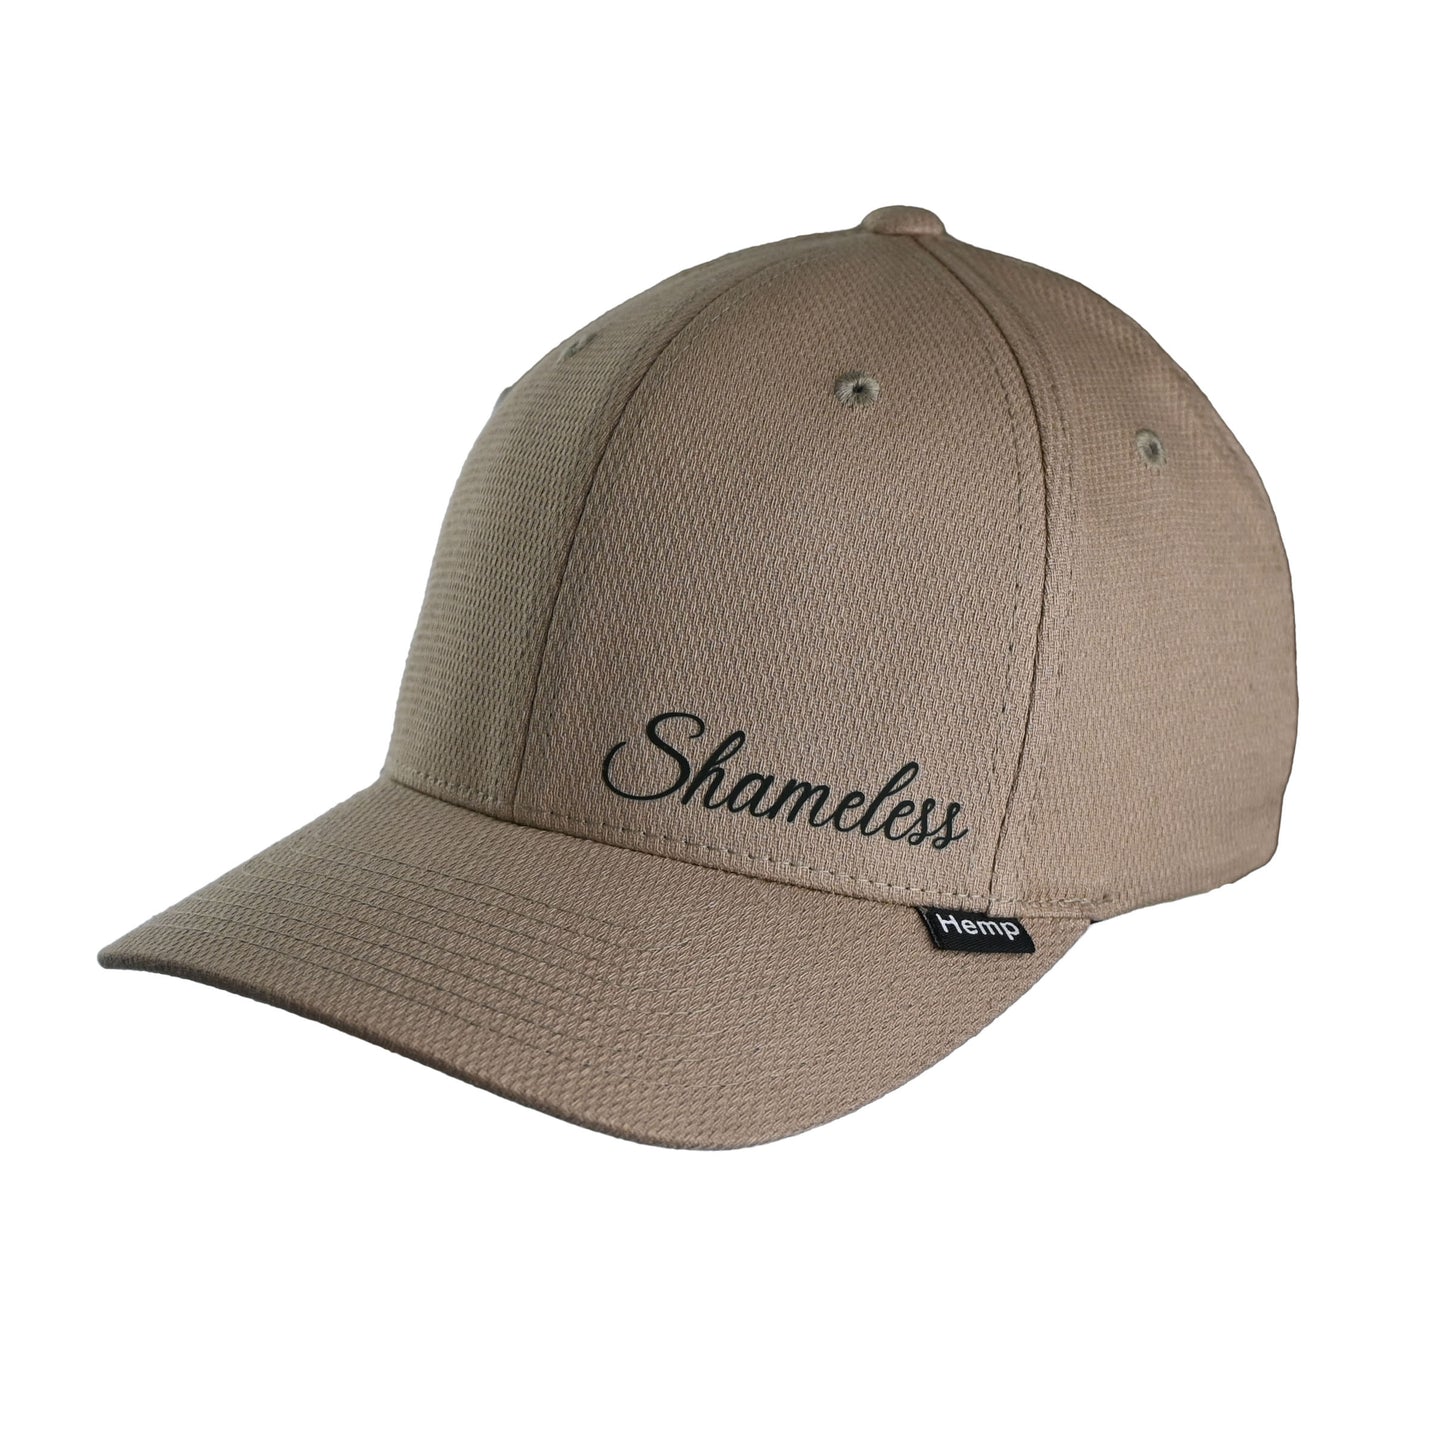 Shameless Future Blend 2.1 Hat